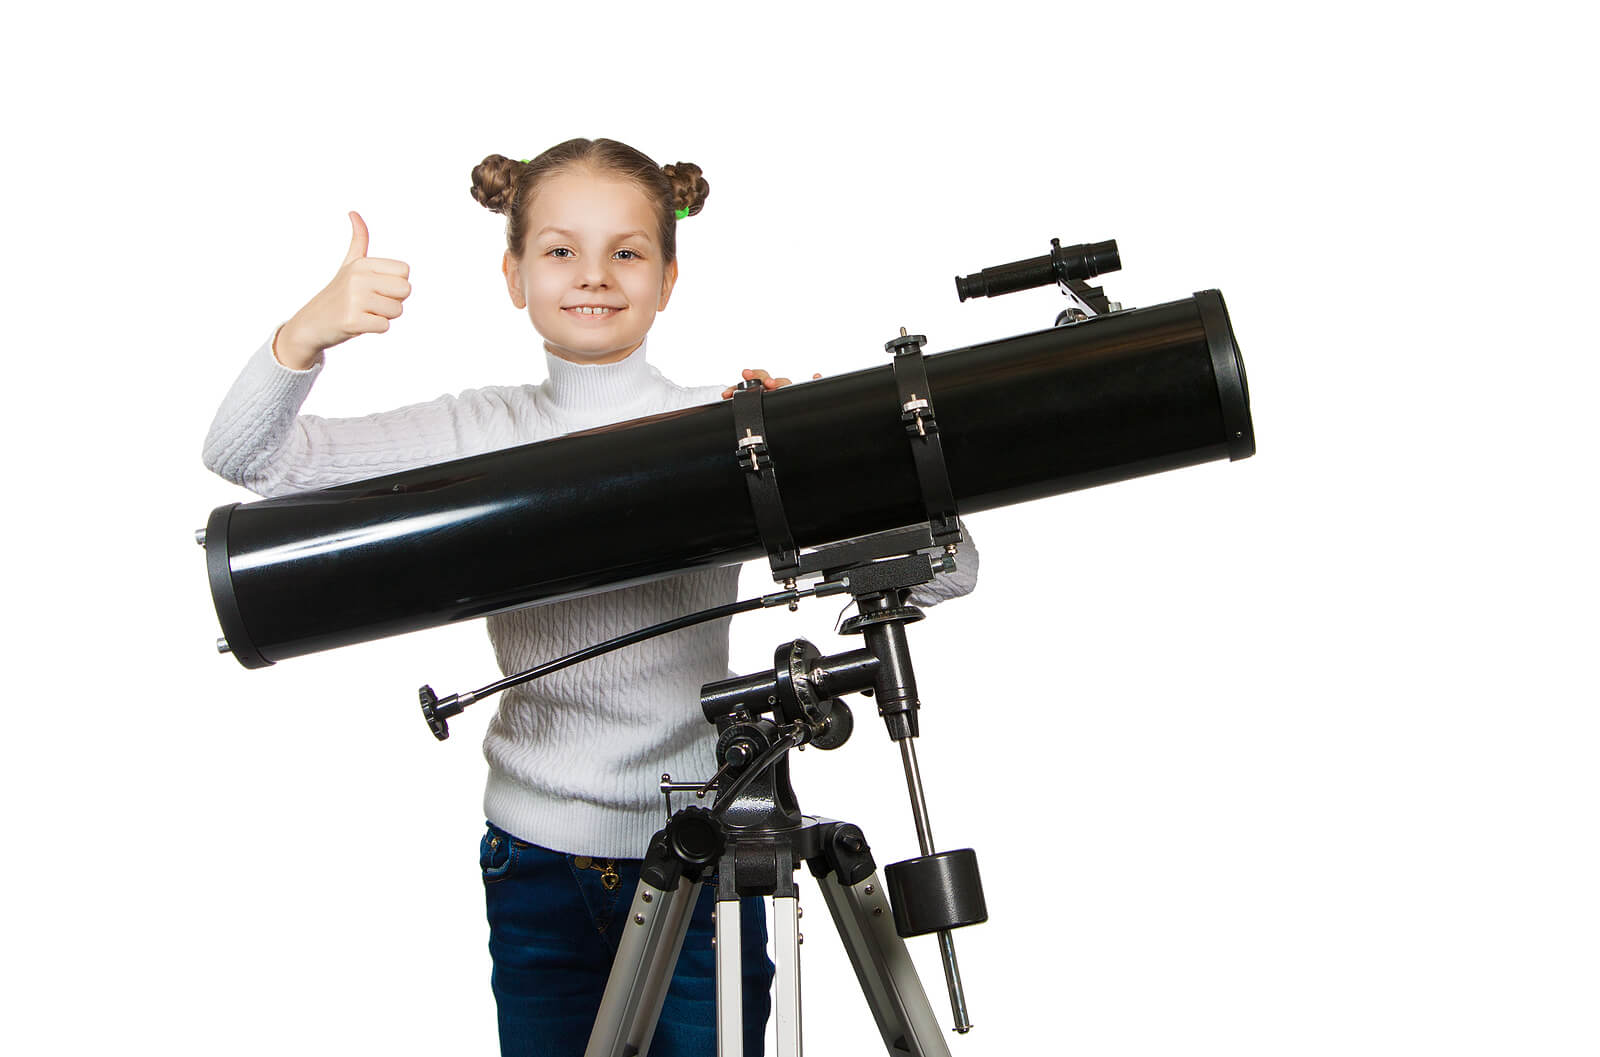 Bambina con un telescopio fatto in casa.